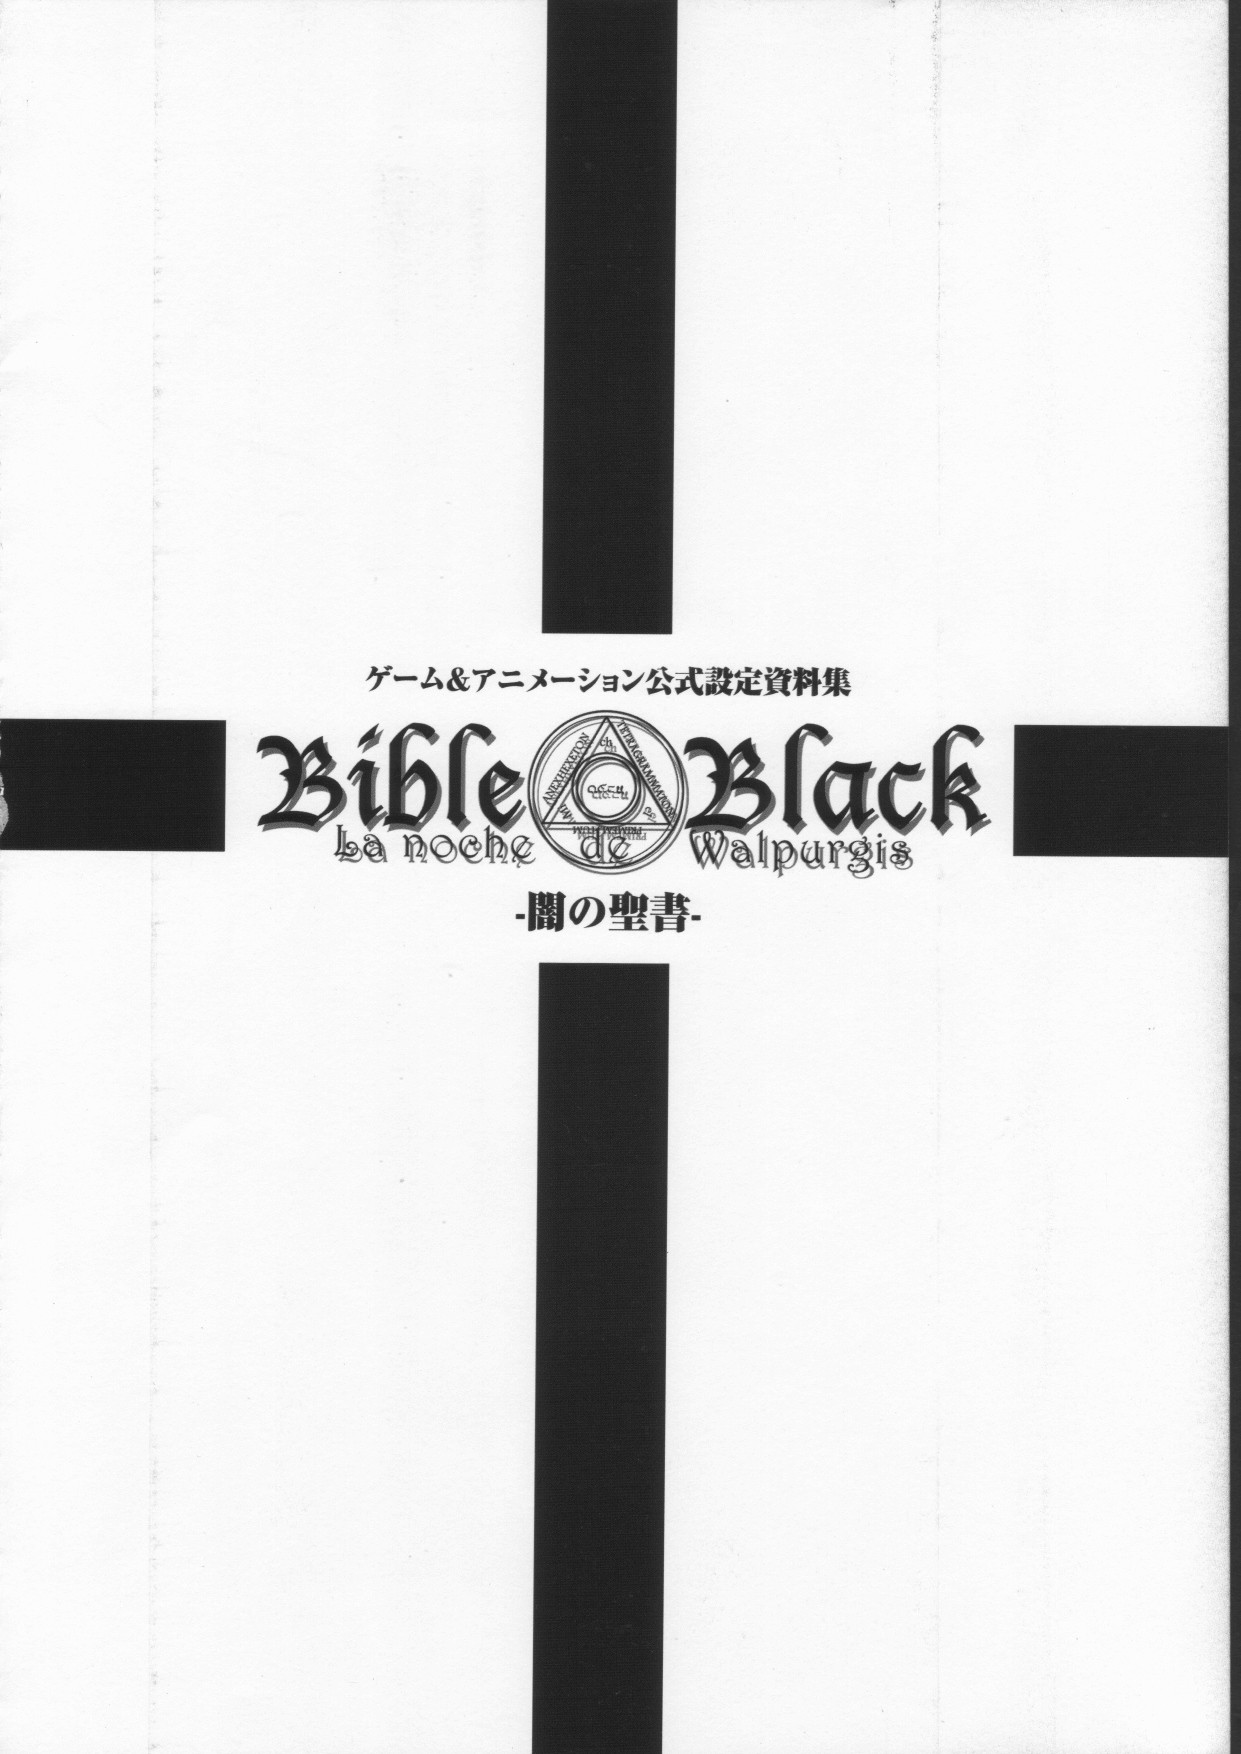 BibleBlack バイブルブラック ゲーム&アニメーション公式設定資料集